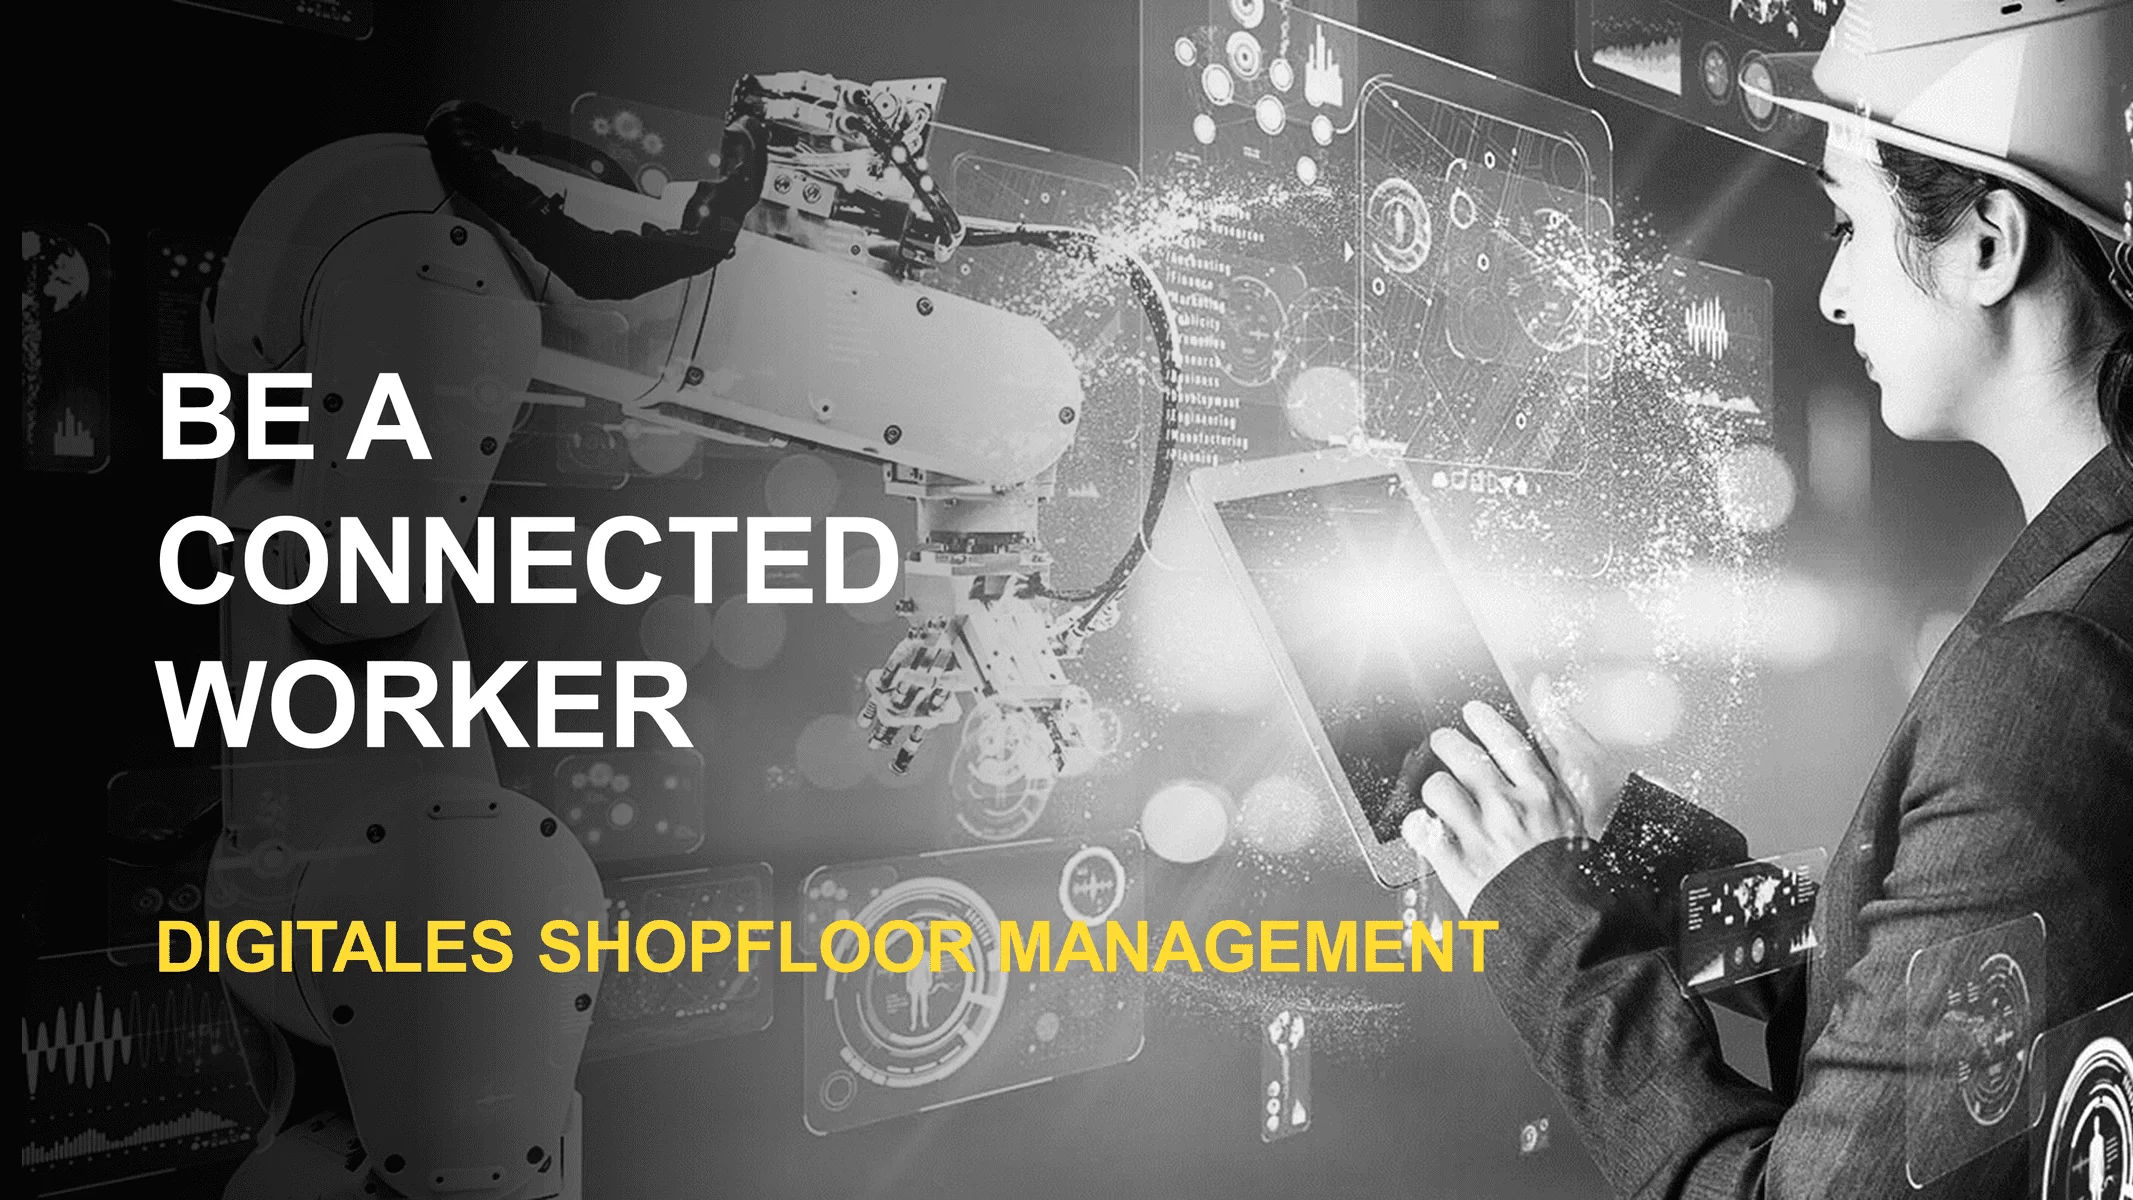 Digital shopfloor management for networked shopfloor workers